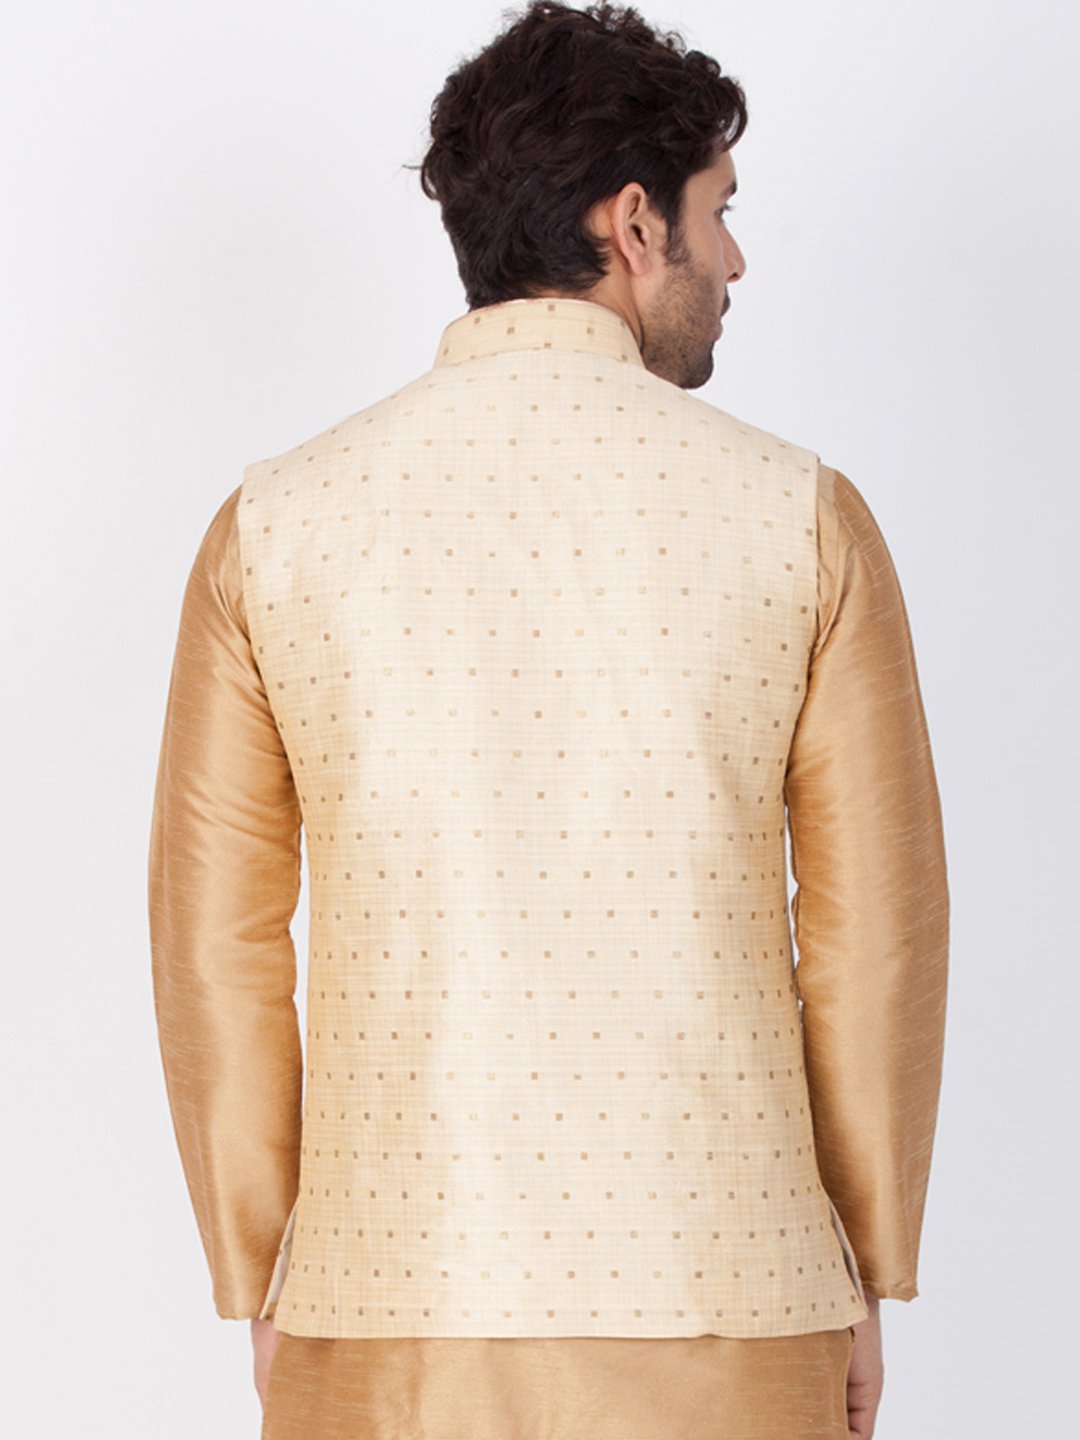 Men's Gold Cotton Blend Ethnic Jacket - Vastramay